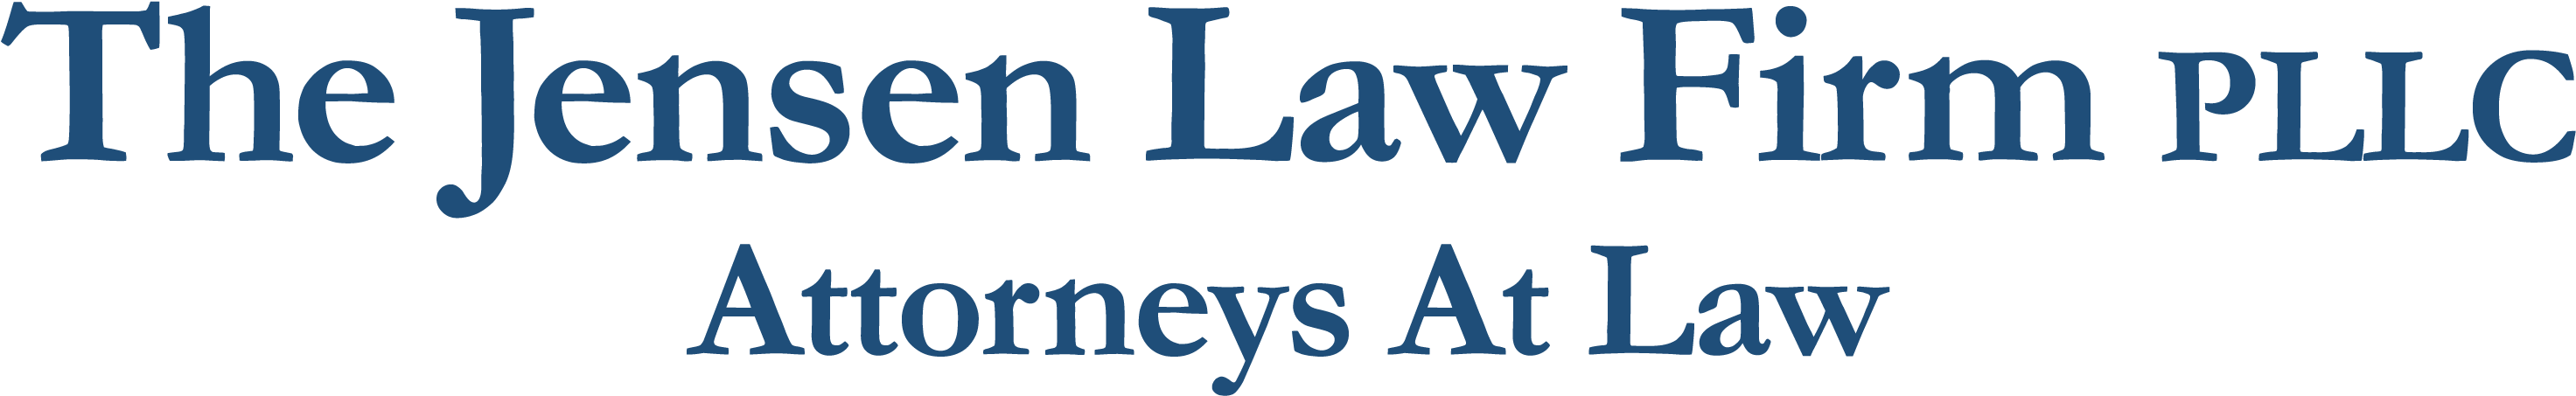 Jensen & Jensen Attorneys At Law - Law Firm (3007x551)